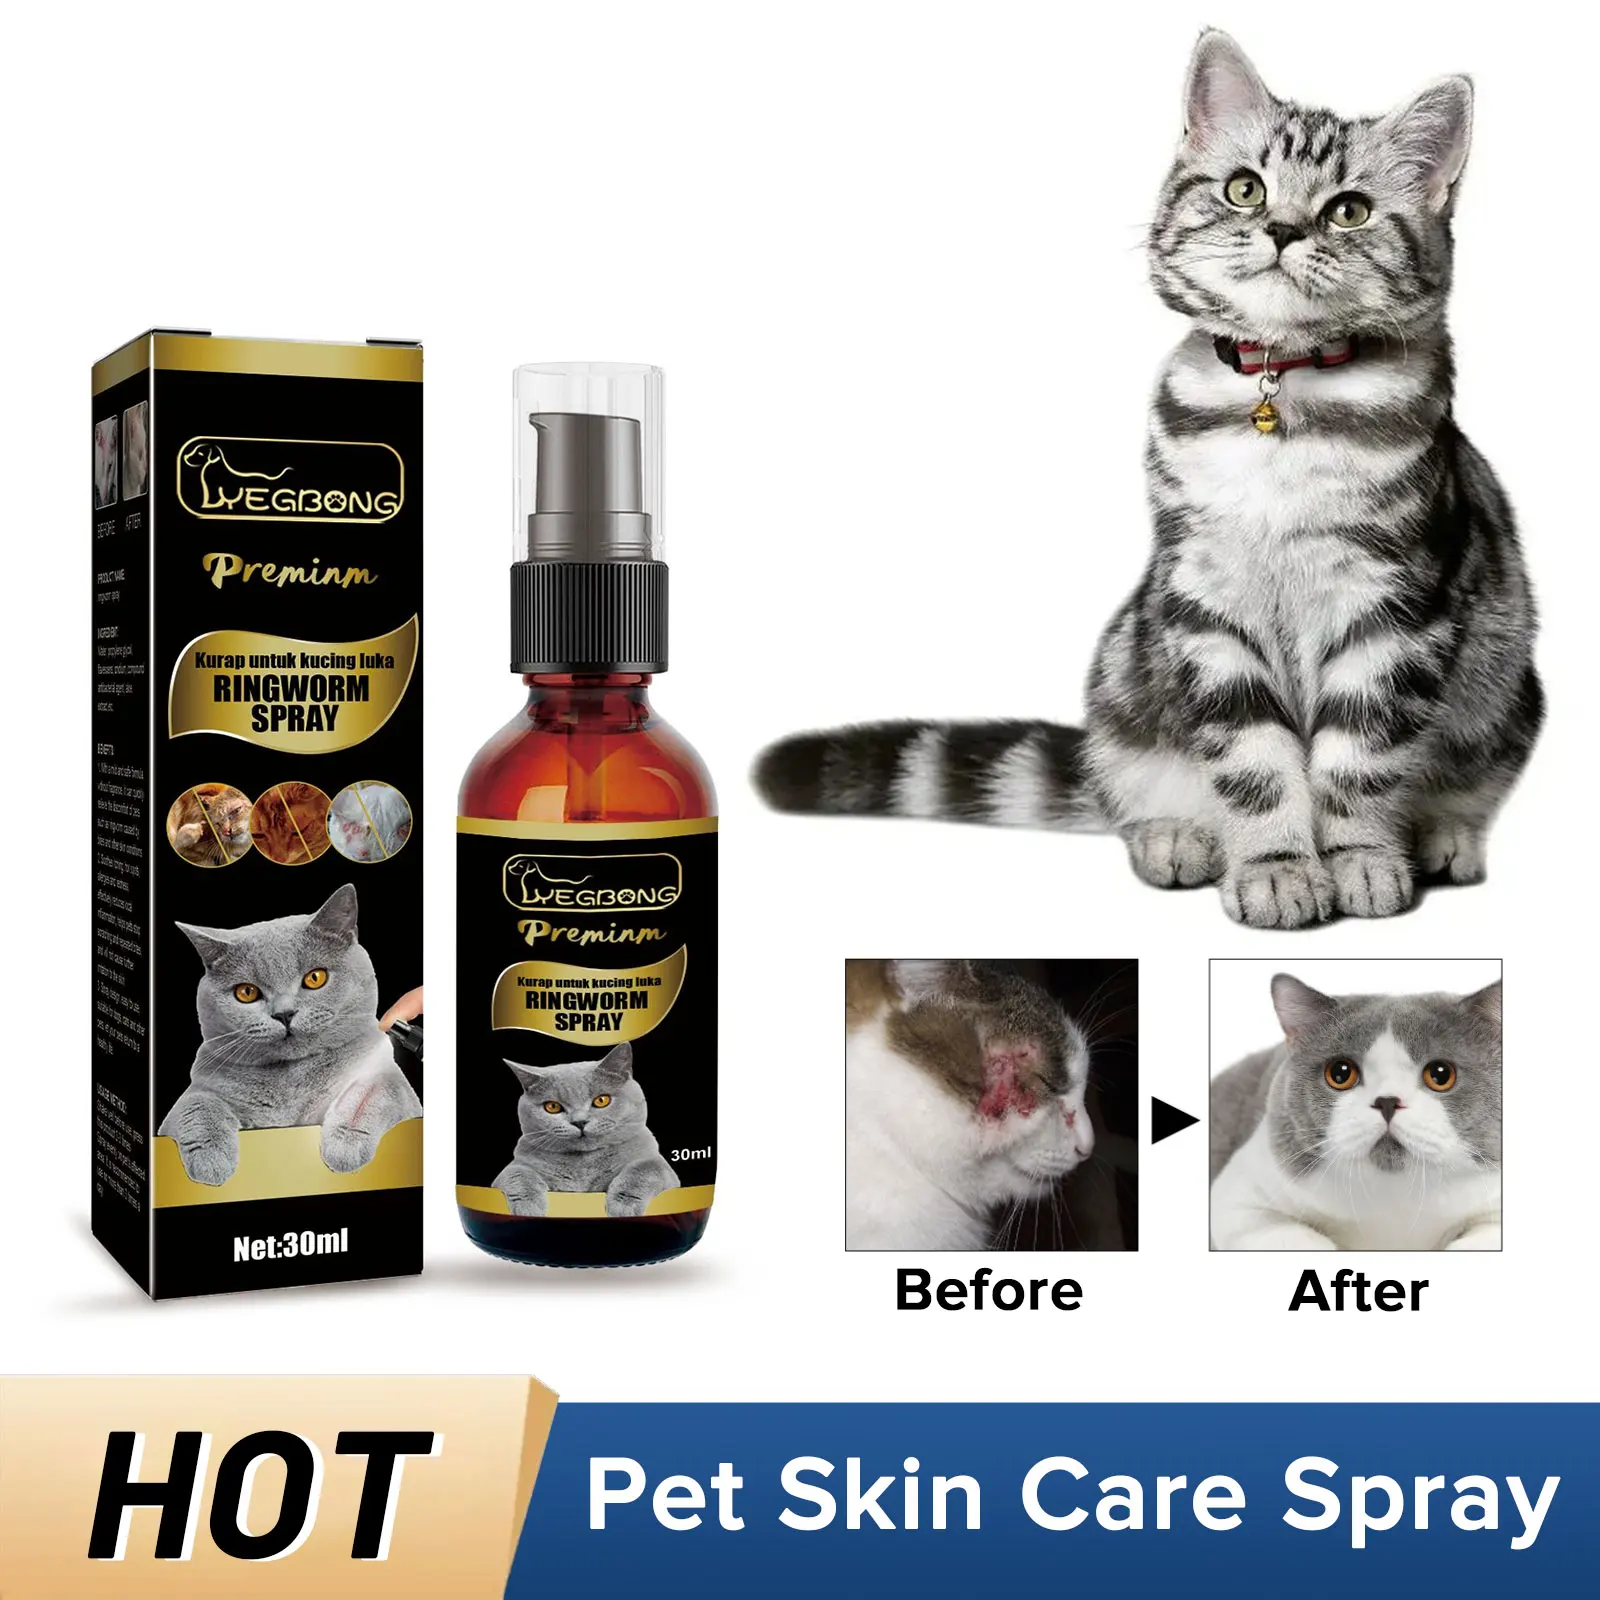 

Pet Skin Care Spray Cat Ringworm Treatment Allergies Dermatitis Skin Disease Flea Control Anti Itching Dog Insect Killer Spray